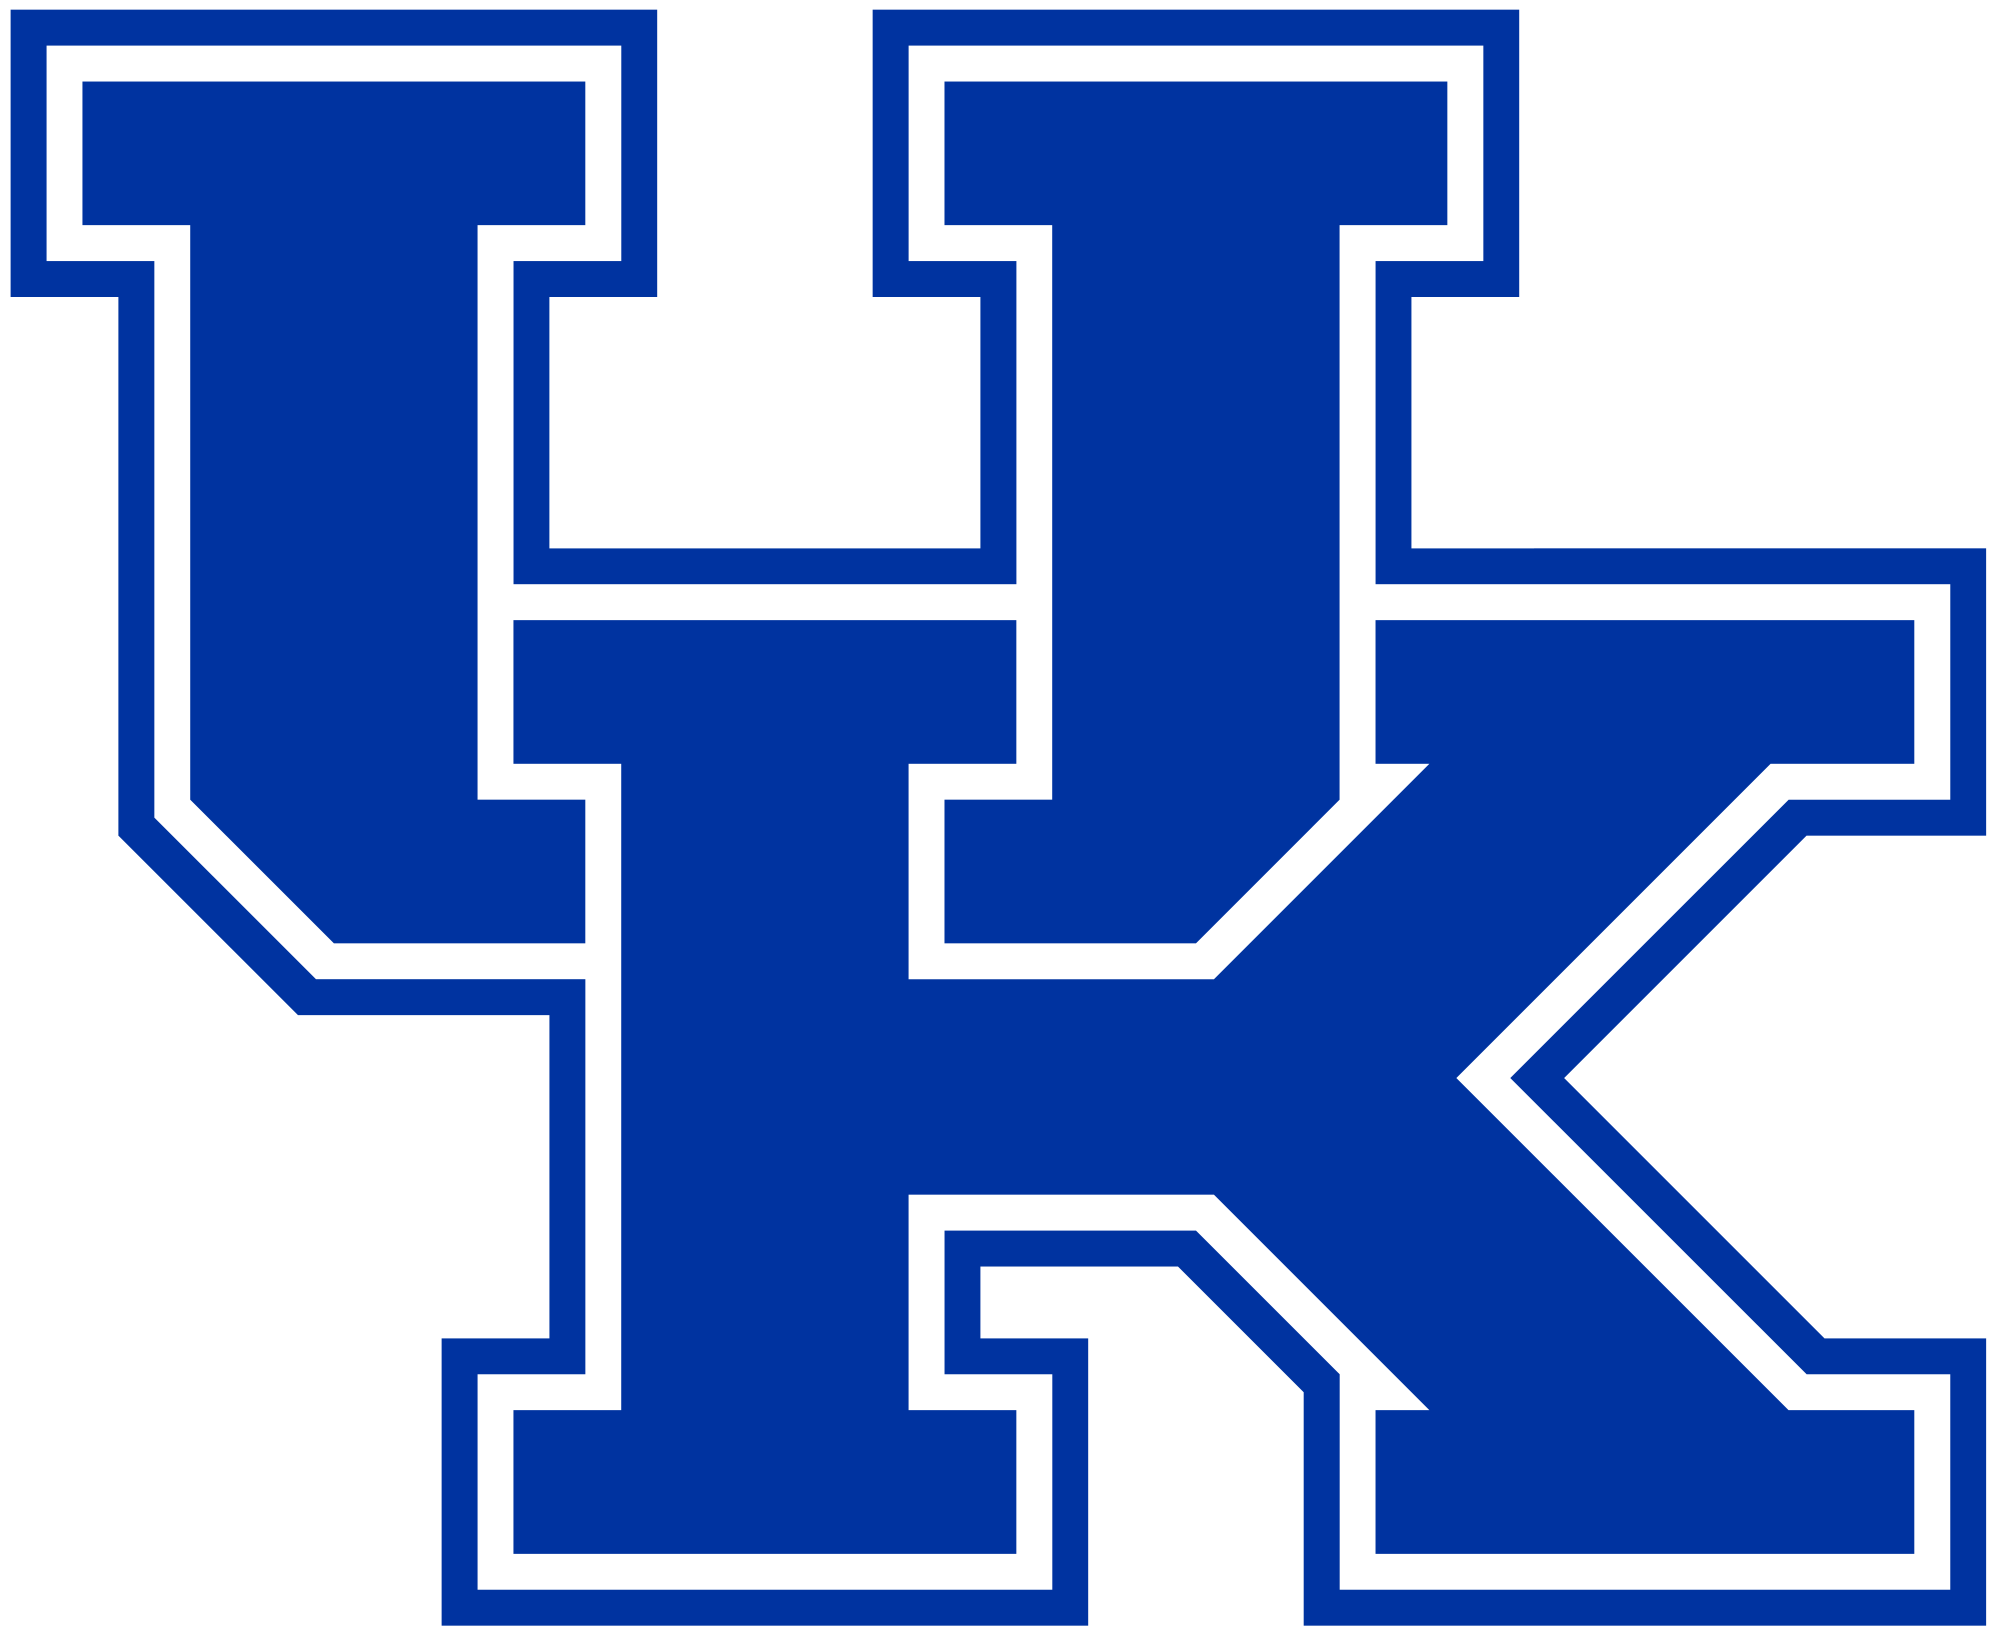 KY Logo - Kentucky Wildcats baseball